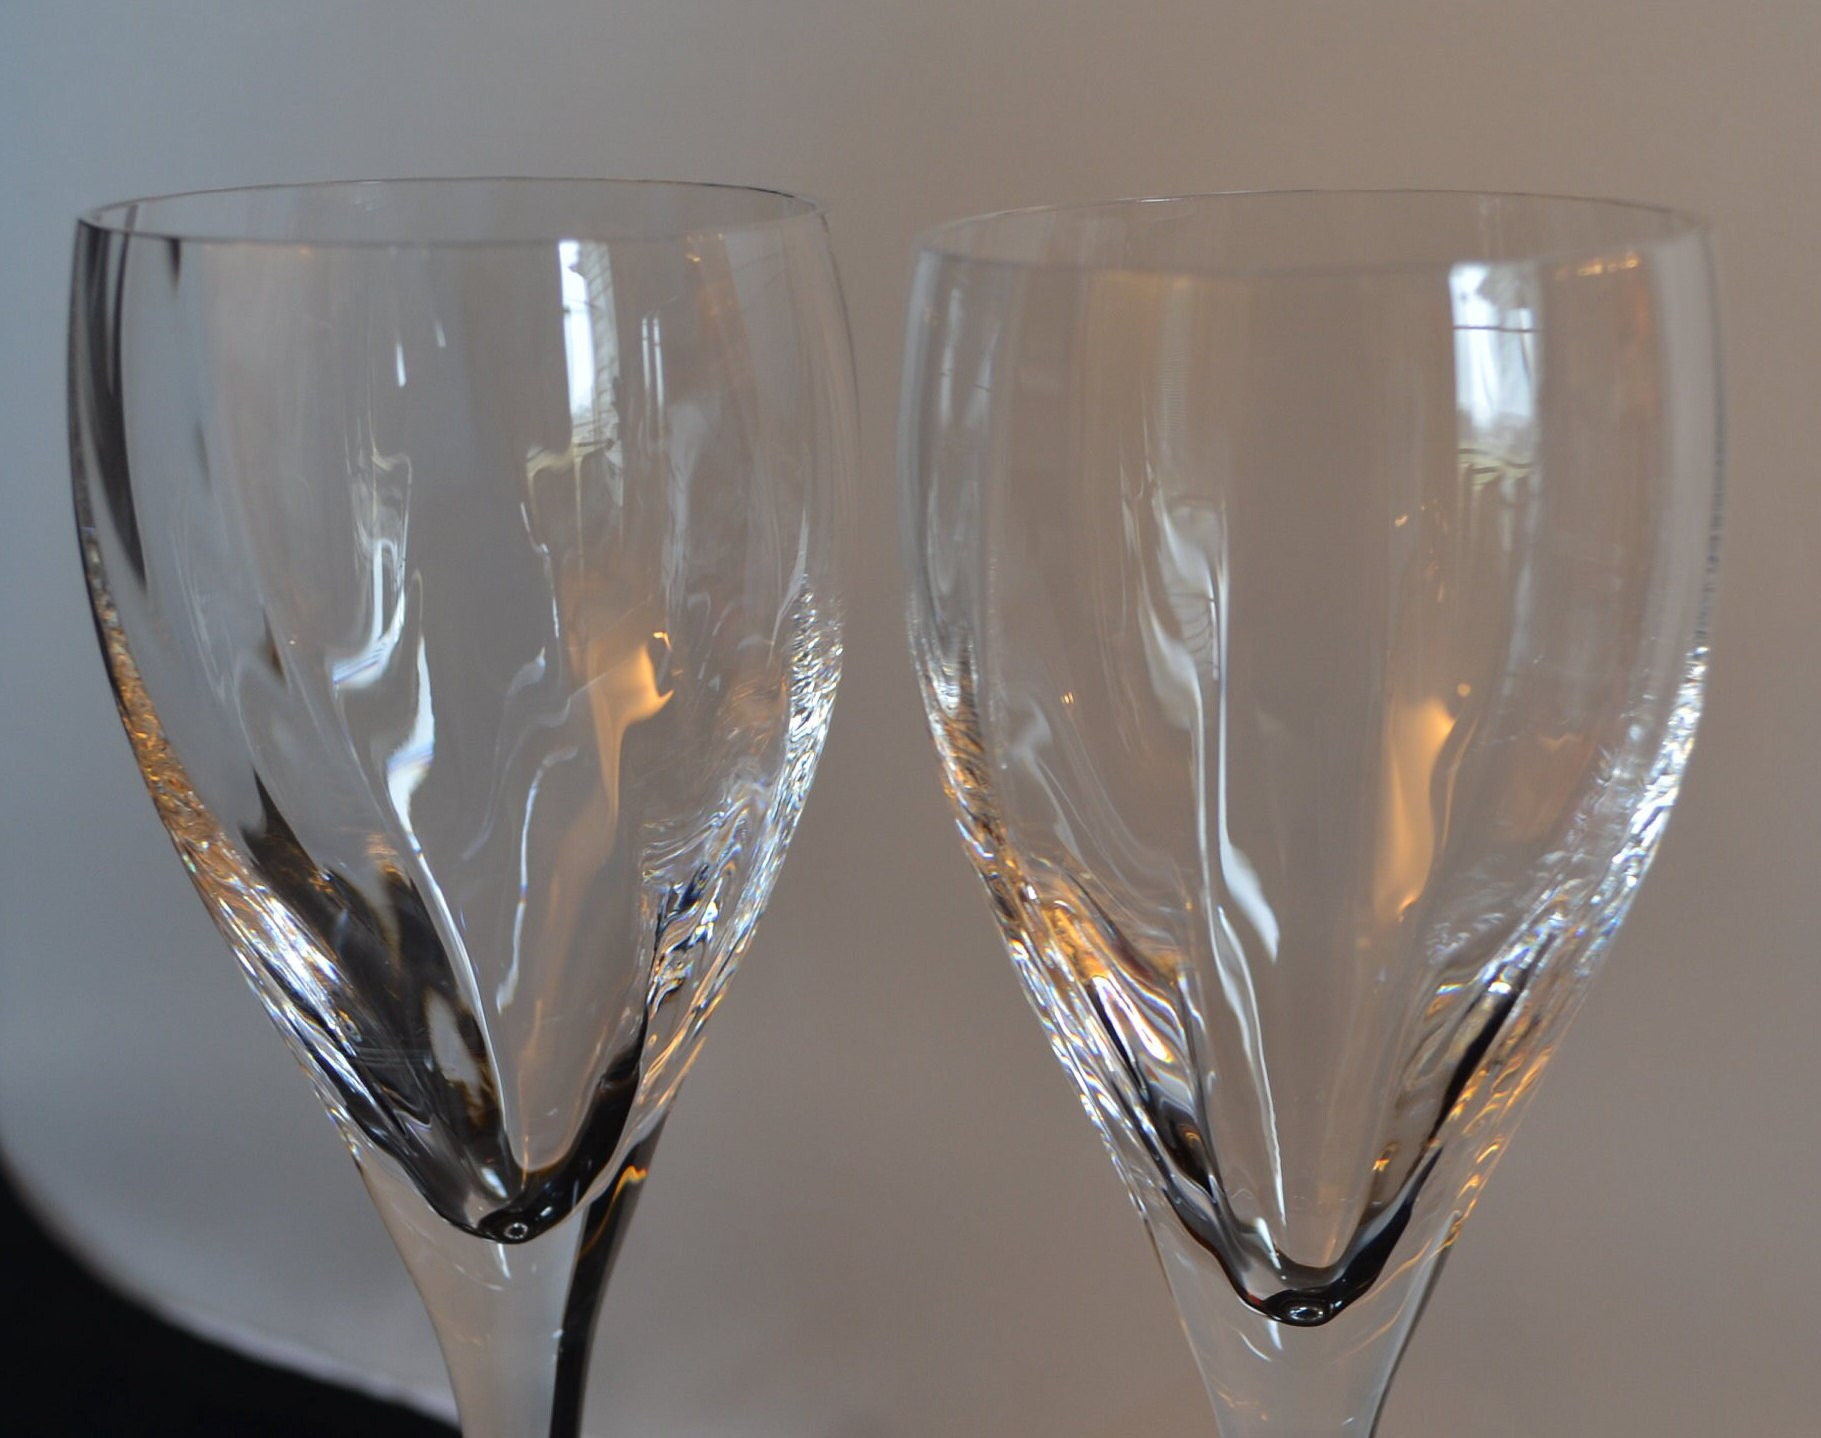 True Colors Stemless Wine Glasses, Set Of 4 – Oneida